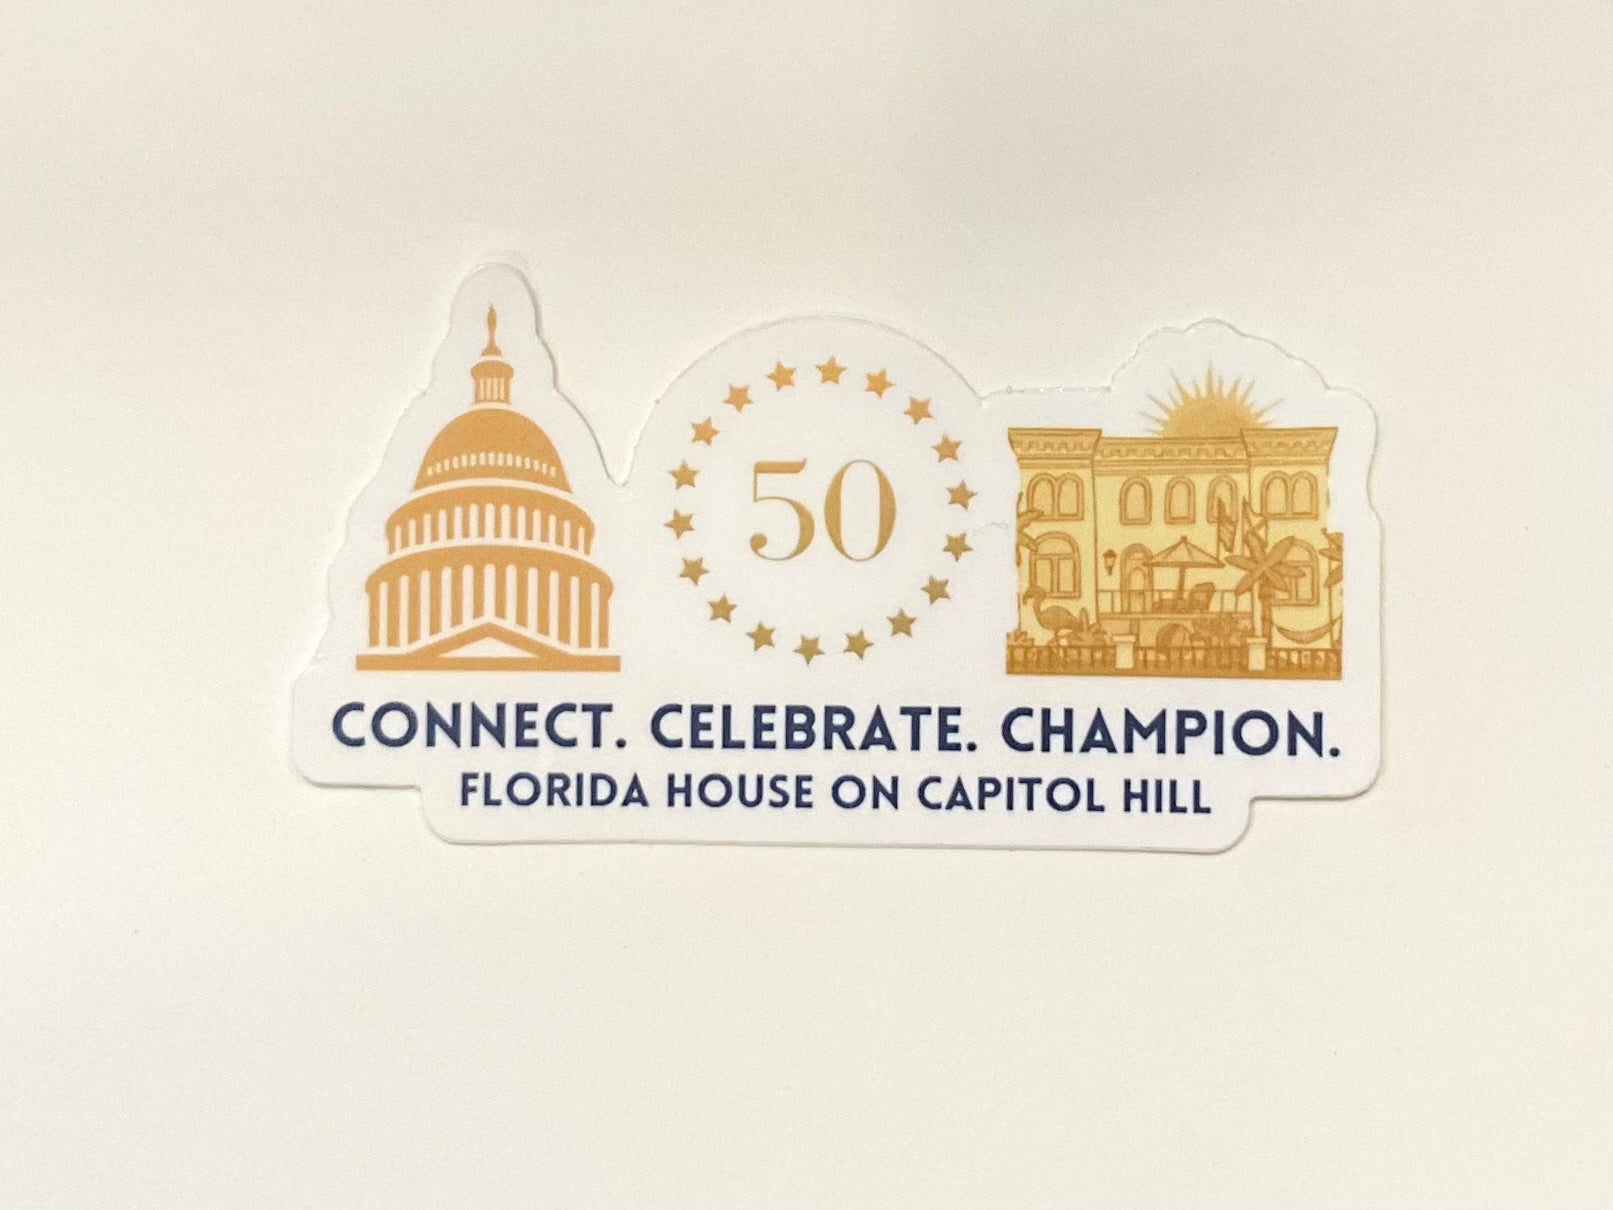 50th Anniversary Sticker